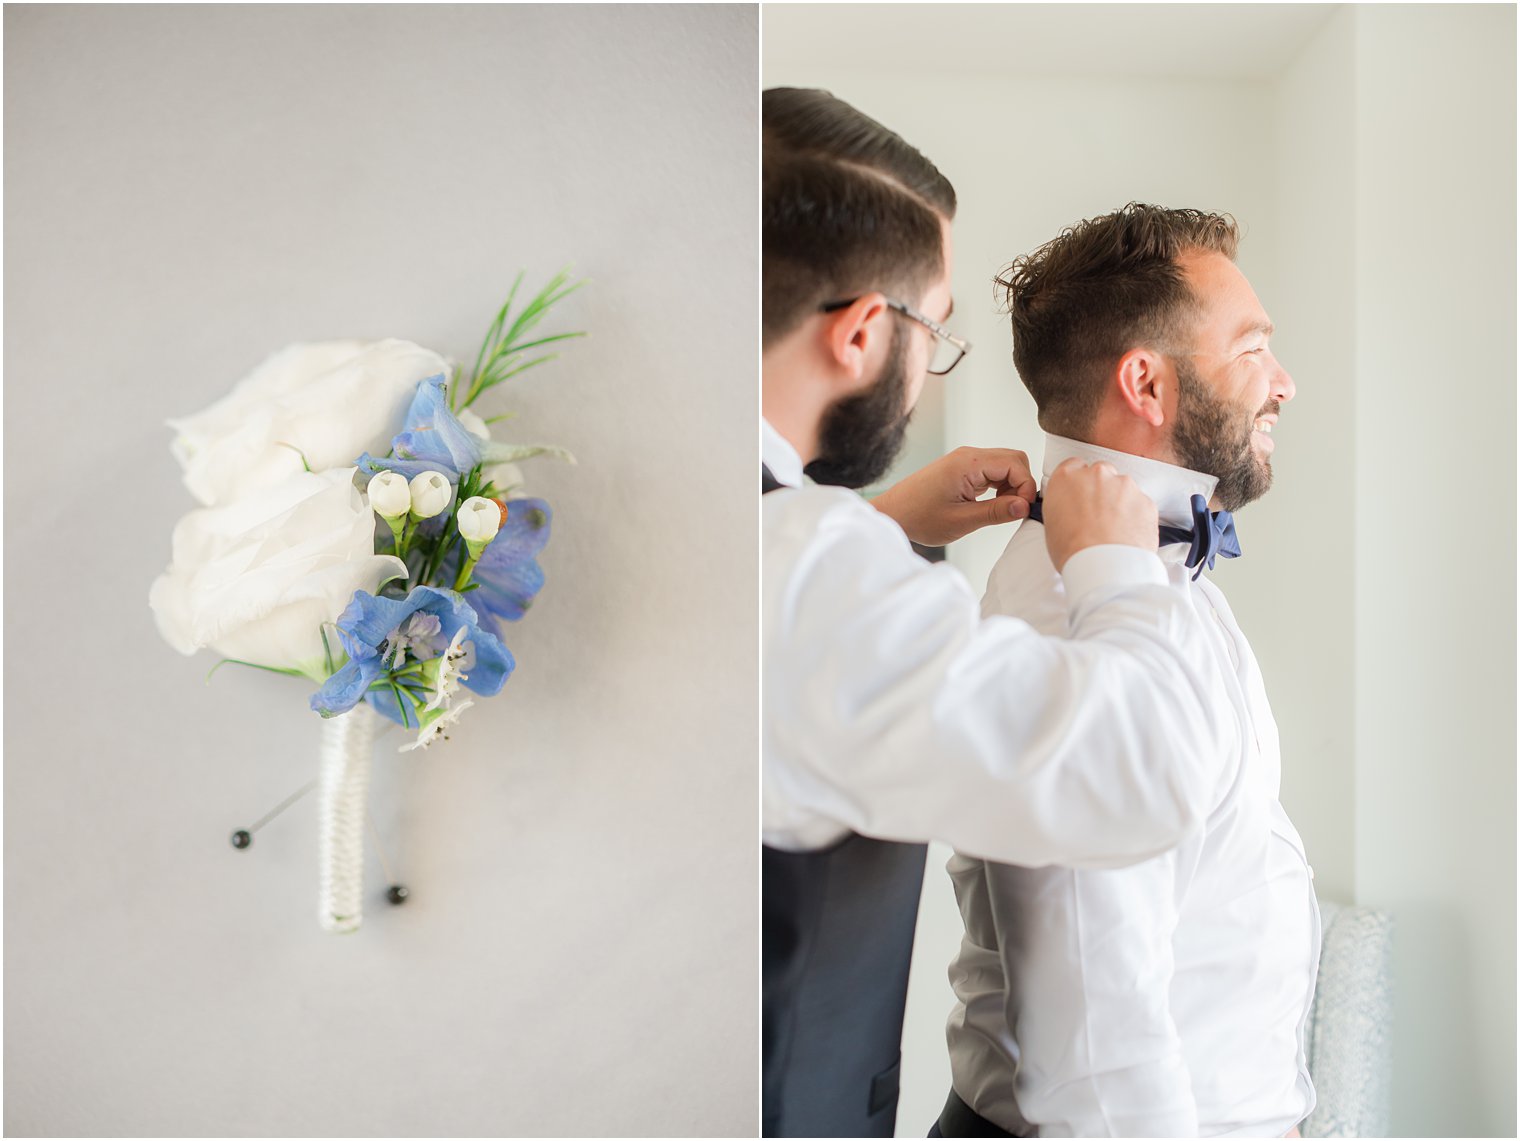 groomsman helps groom with tie on wedding day